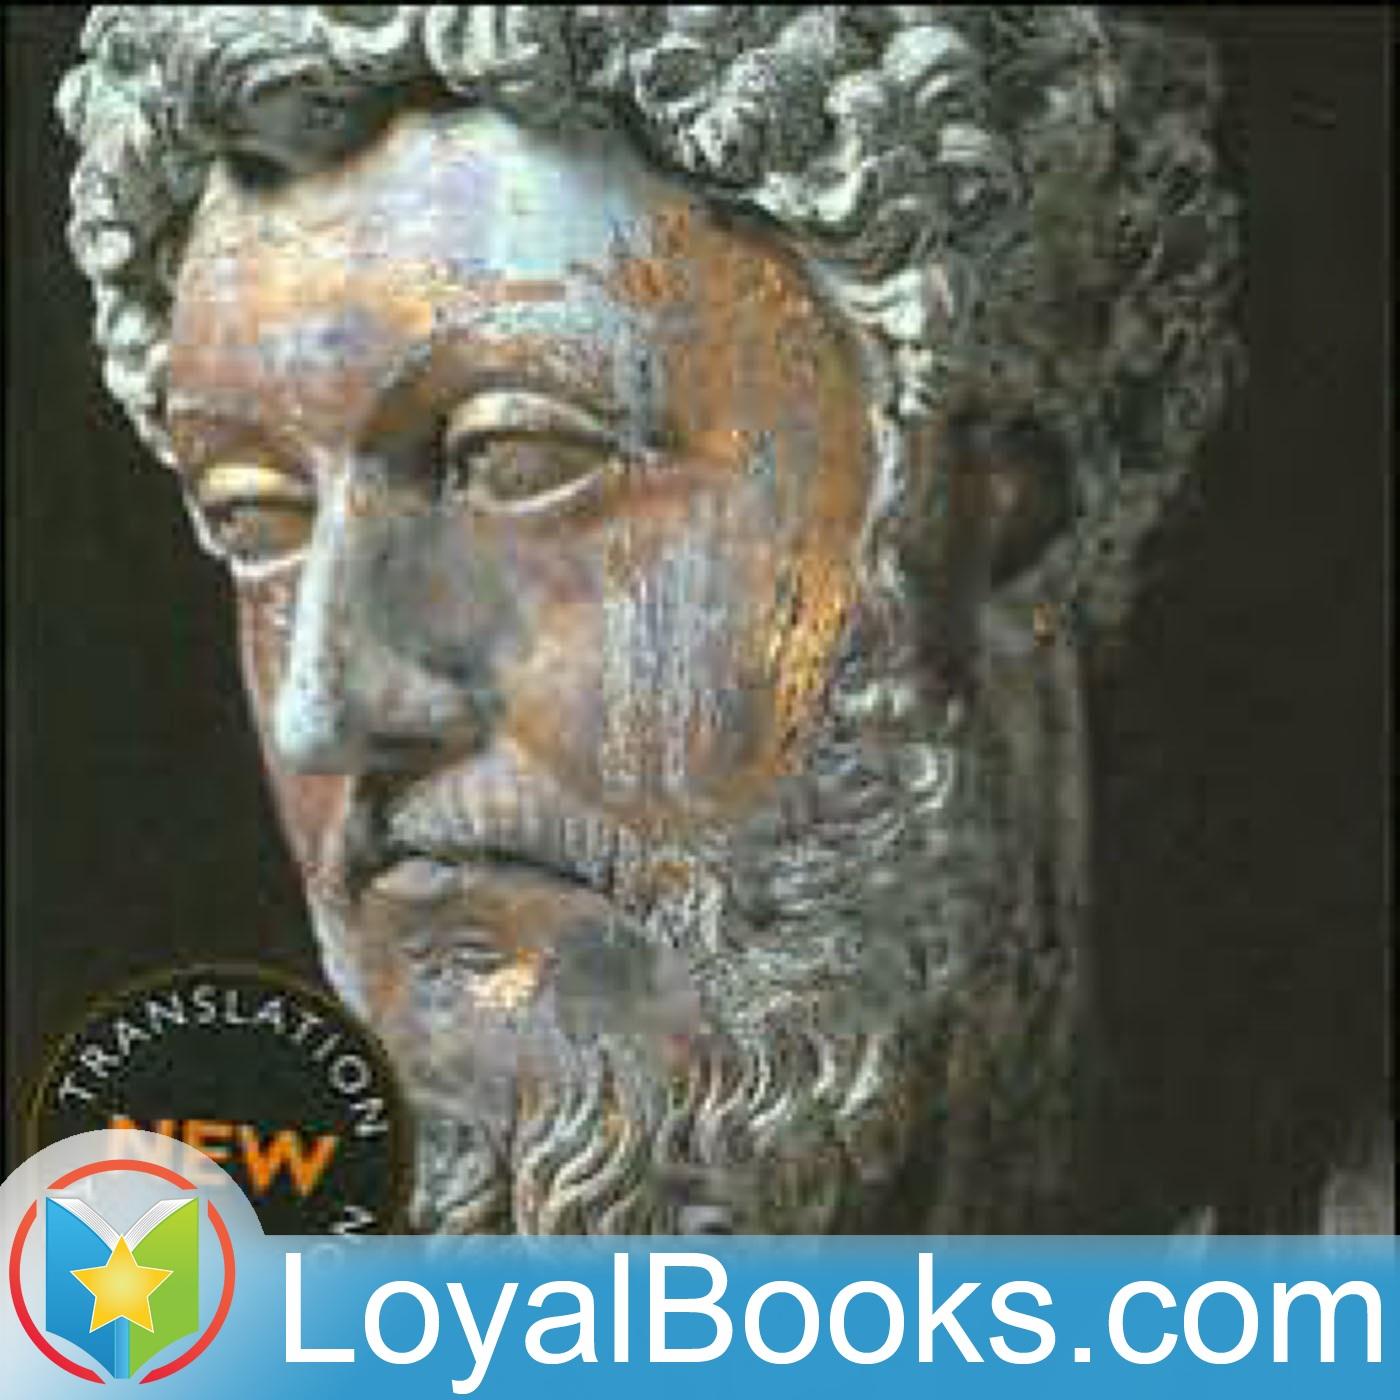 Meditations by Marcus Aurelius - Free at Loyal Books